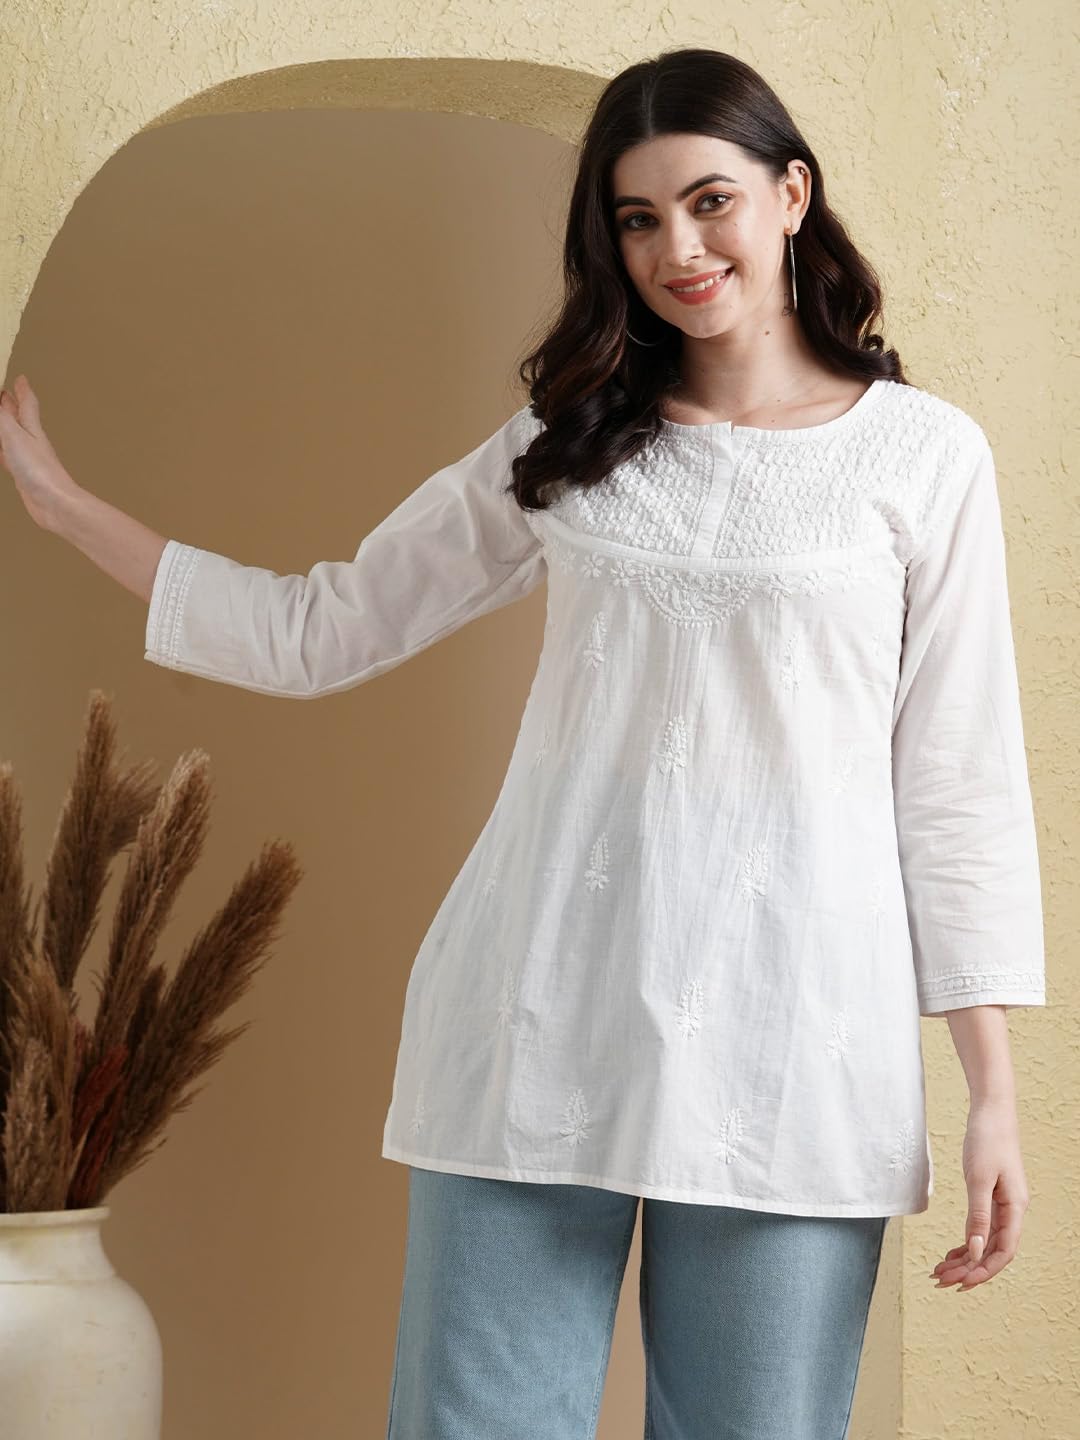 Ada Hand Embroidered Lucknow Chikankari Straight White Cotton Top Tunic Kurti for Women A296140 (6XL)